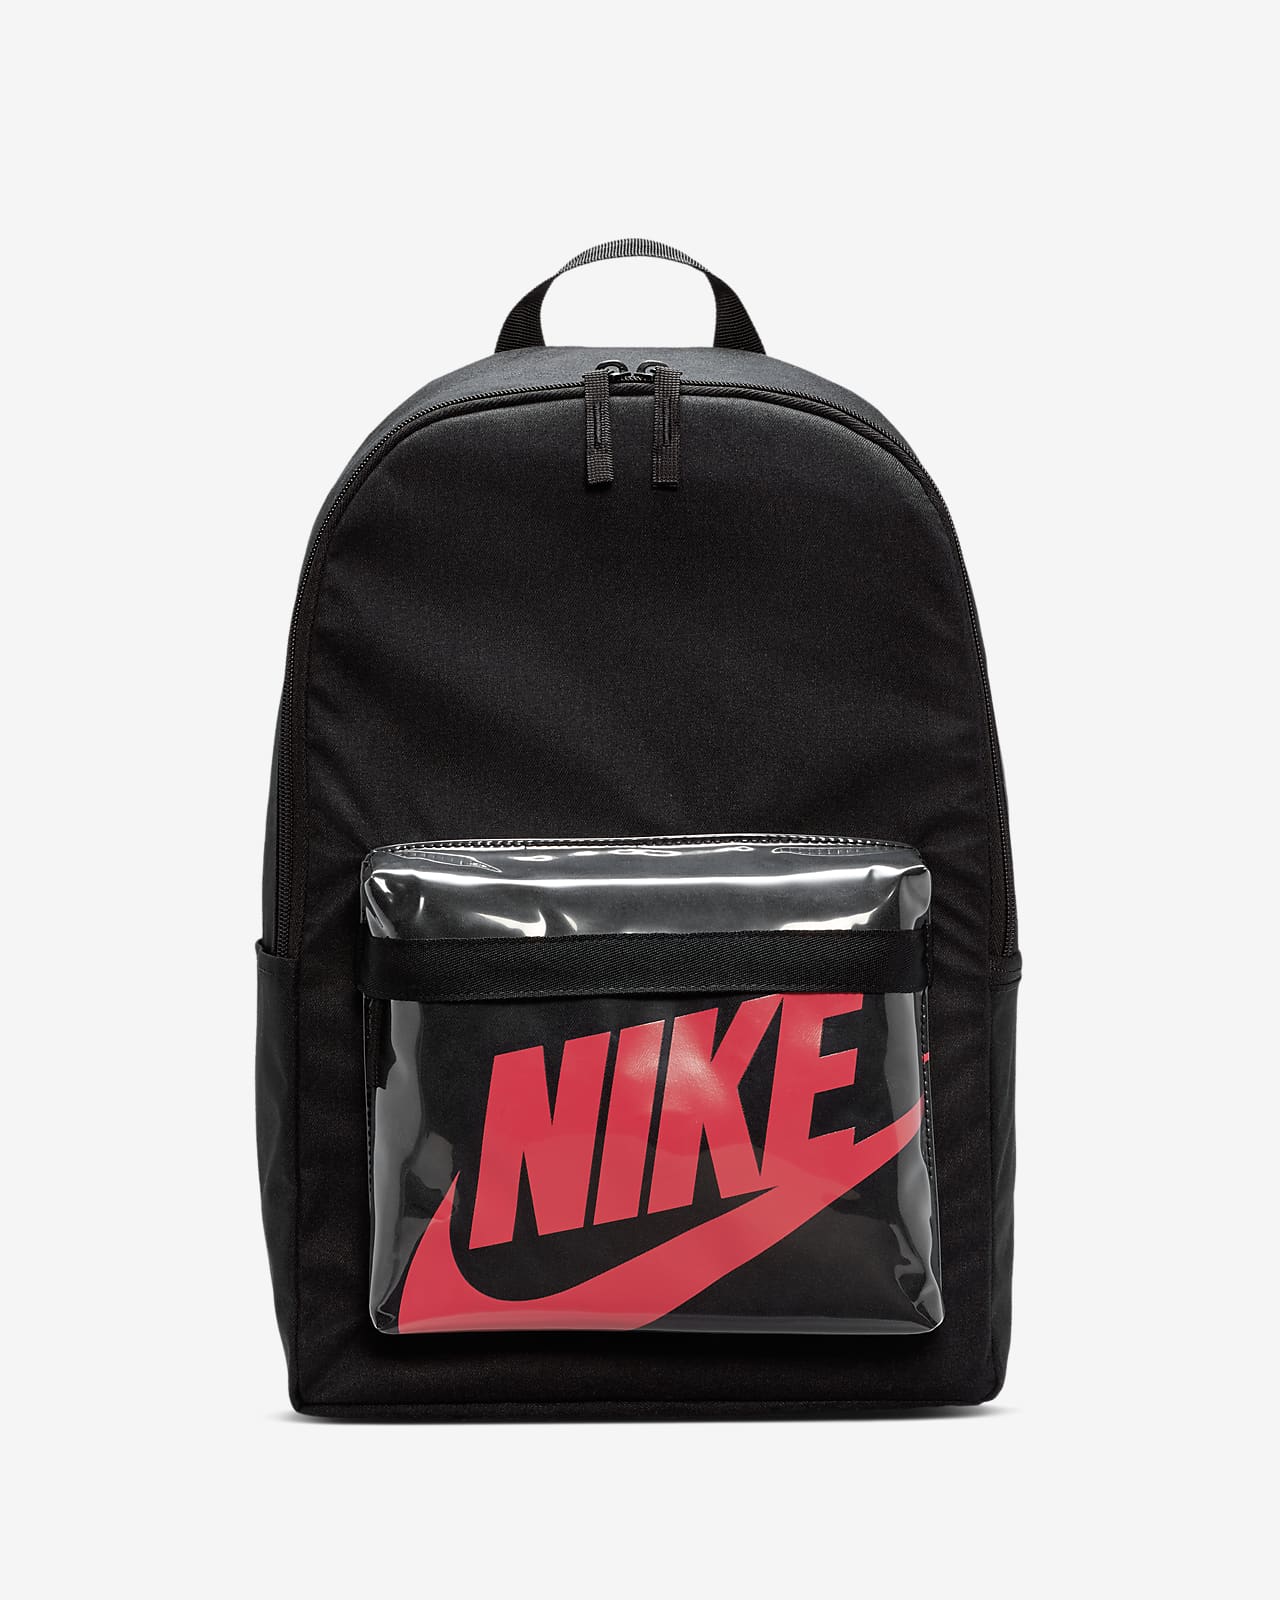 nike heritage backpack size